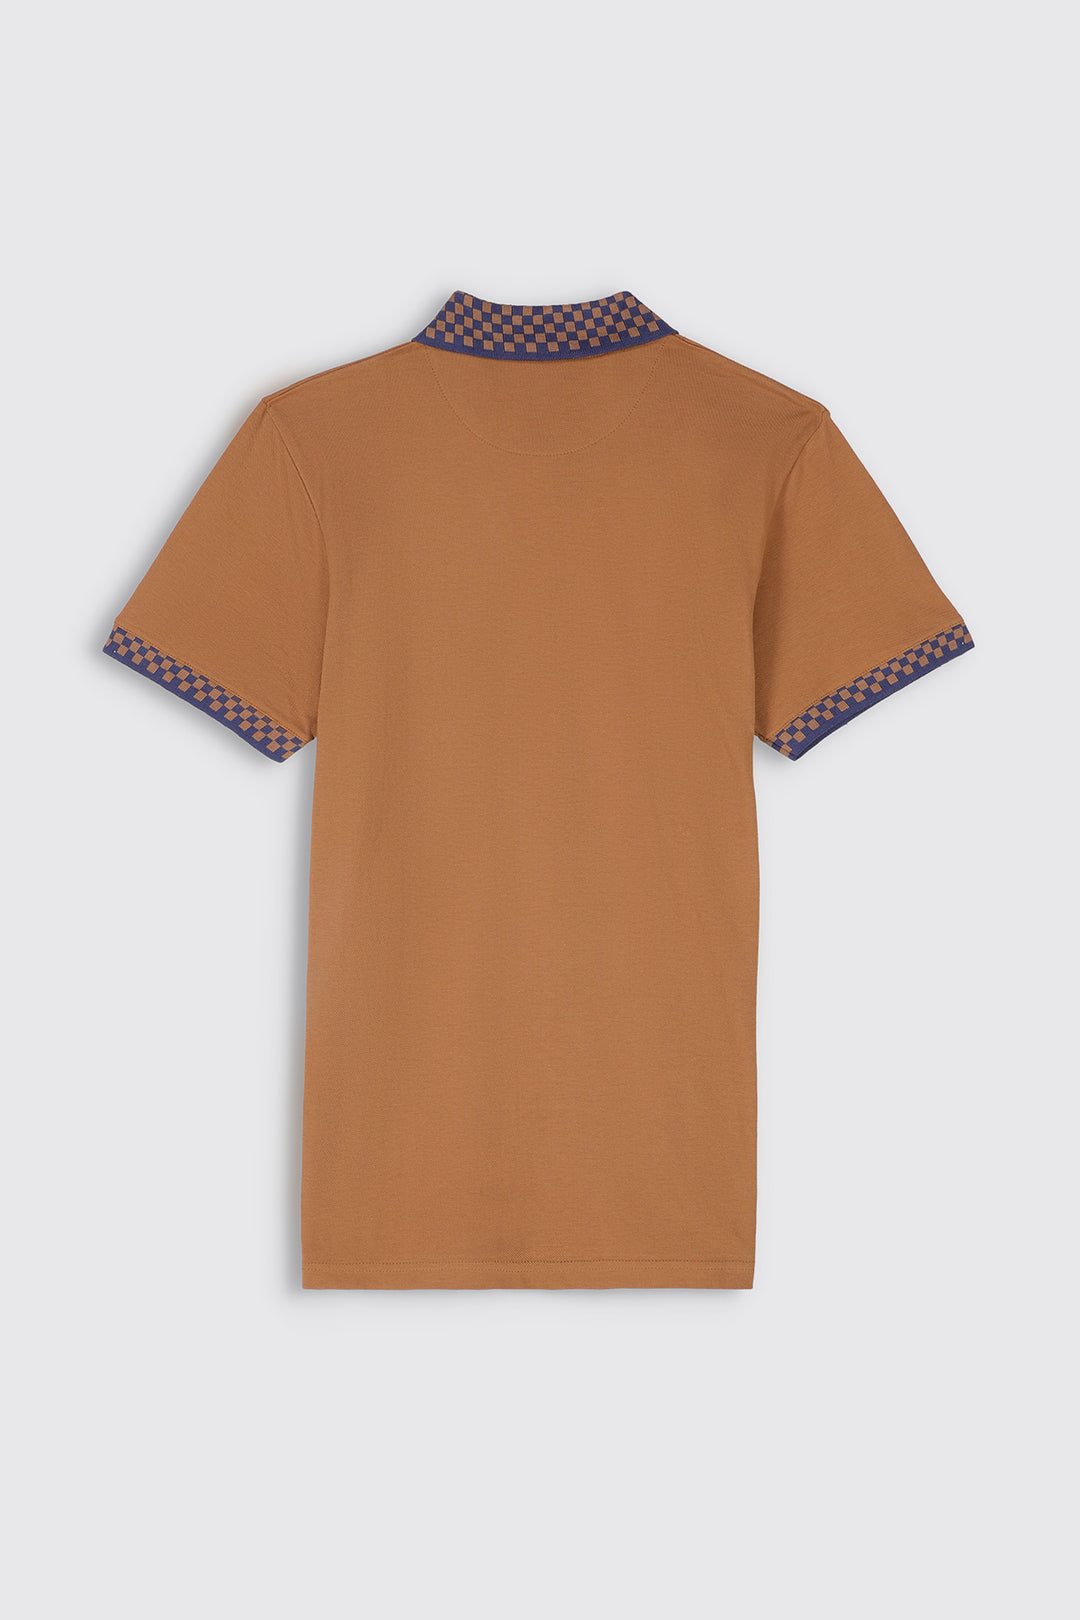 Tobacco Brown Jacquard Collar Polo Shirt (Plus Size) - S23 - MP0218P